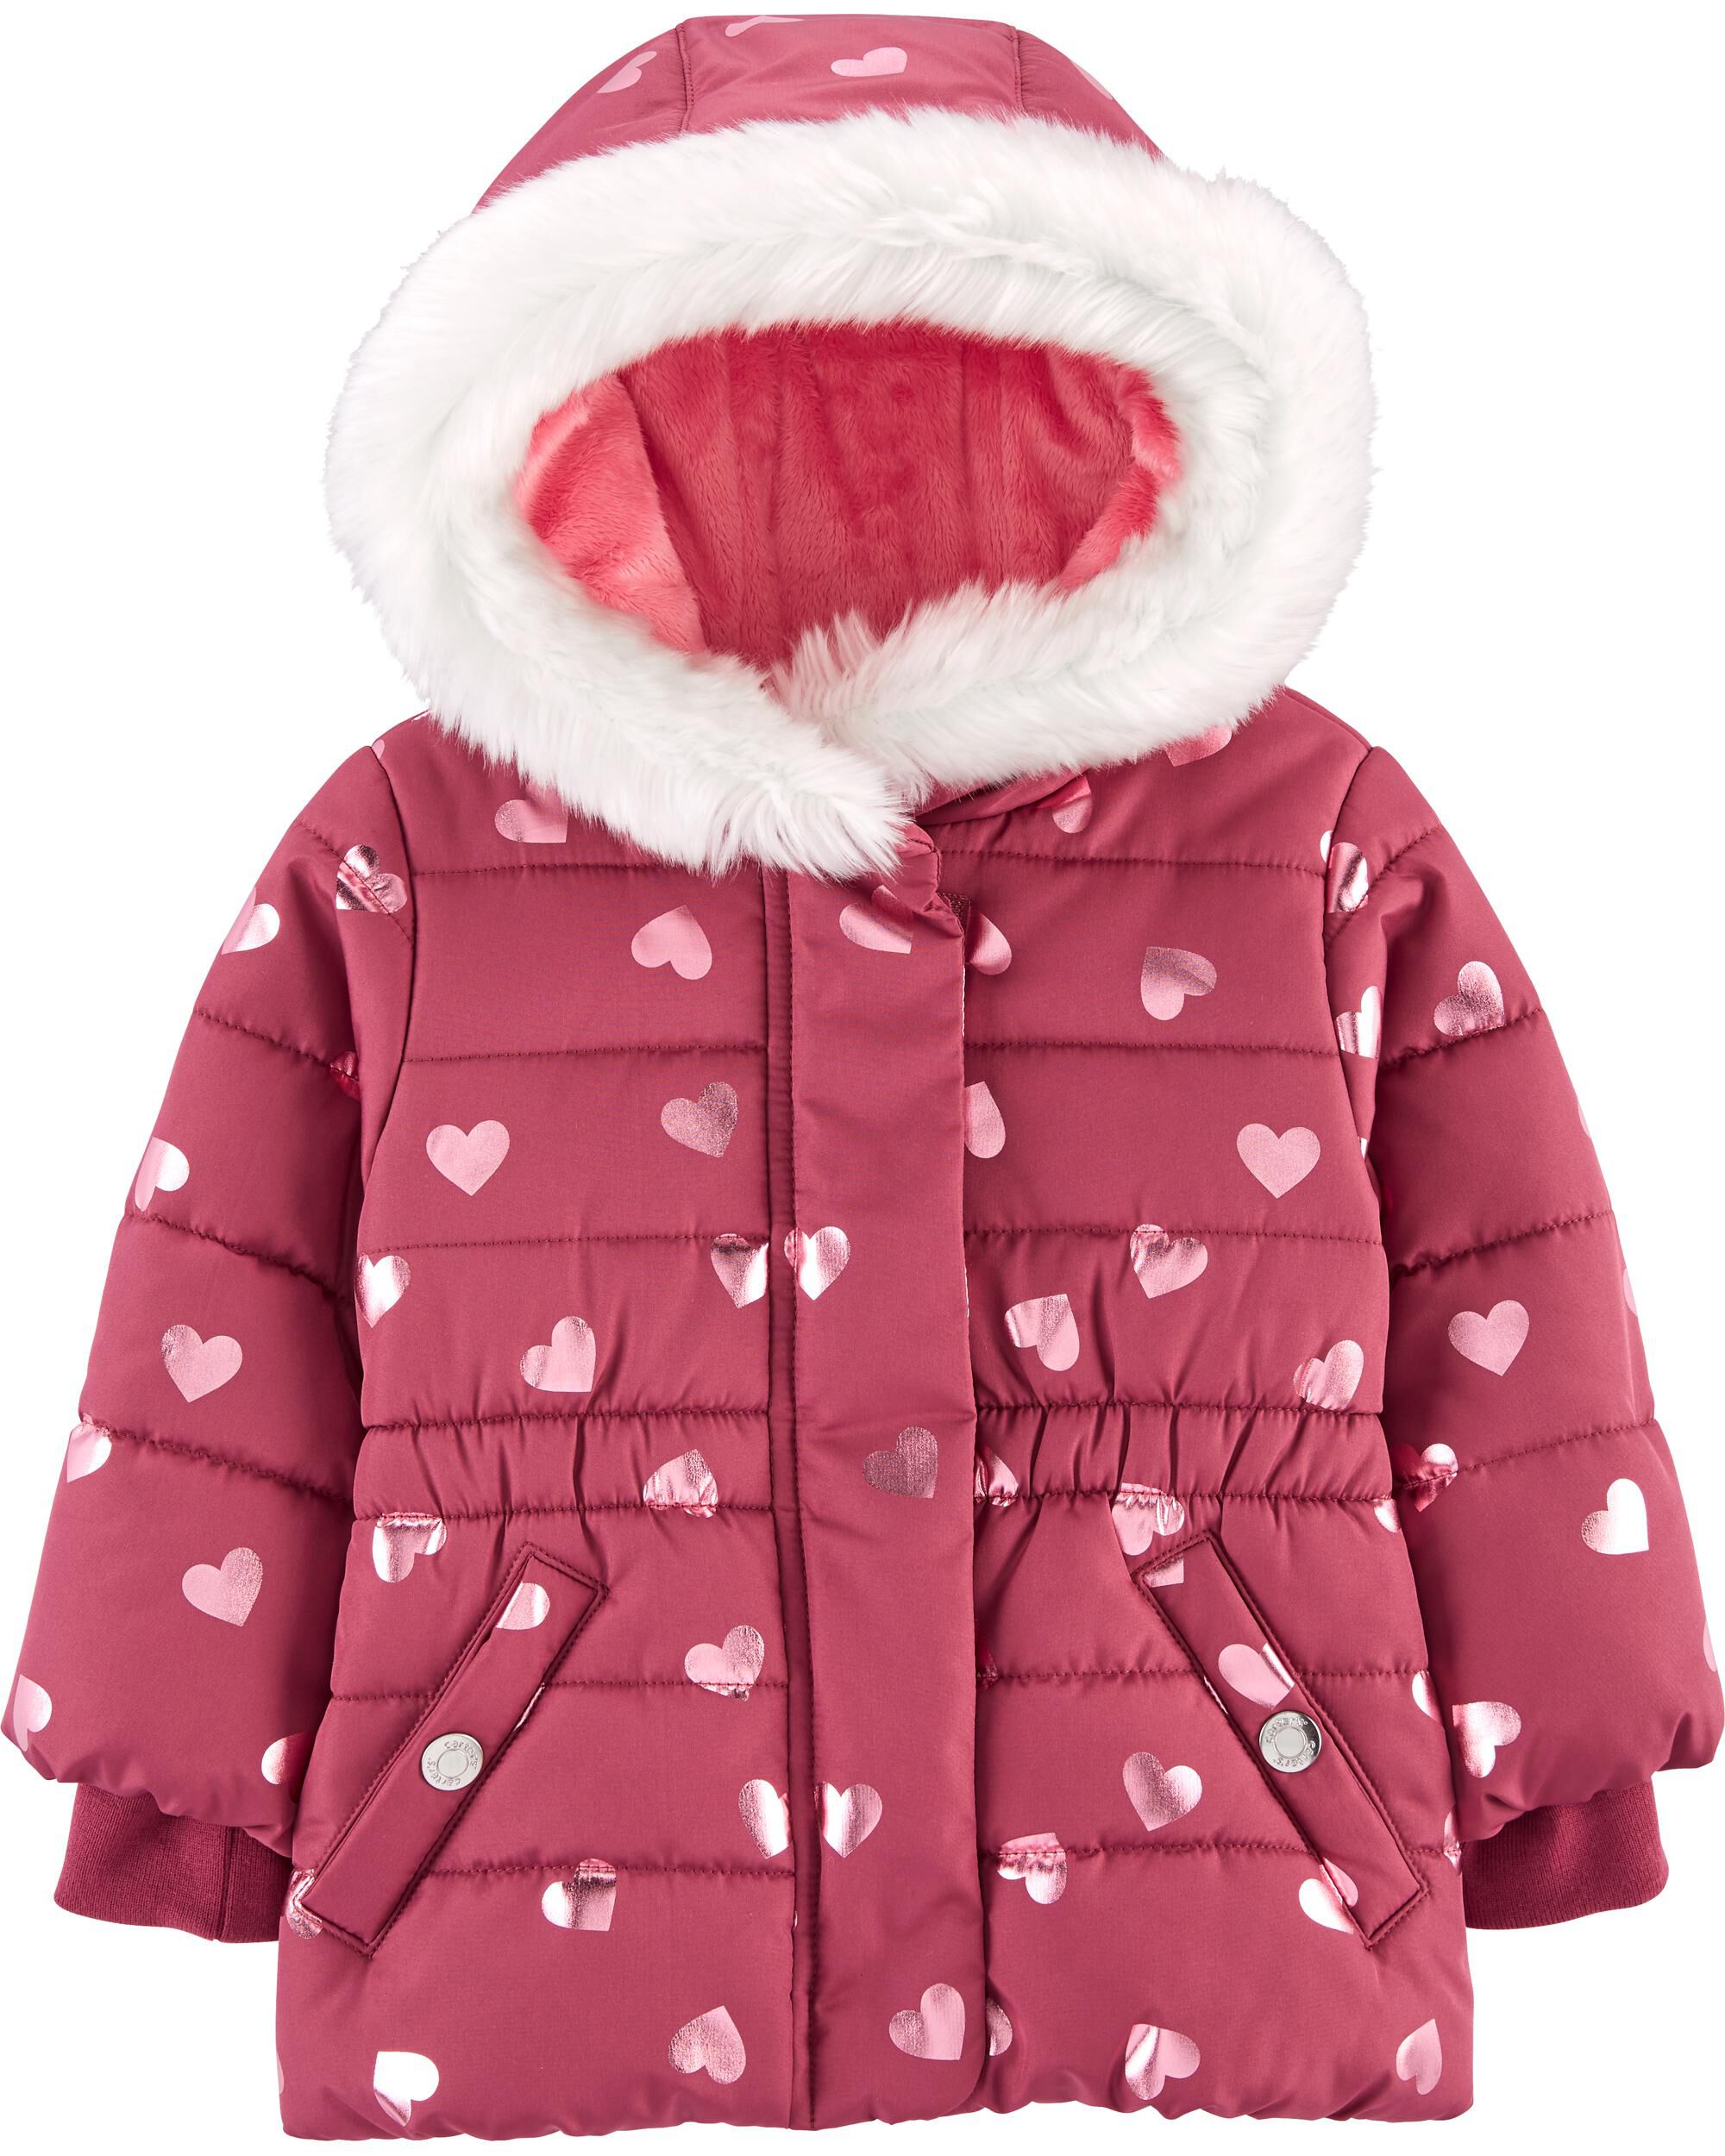 Carters Baby Girls Fleece Lined Puffer Jacket Coat